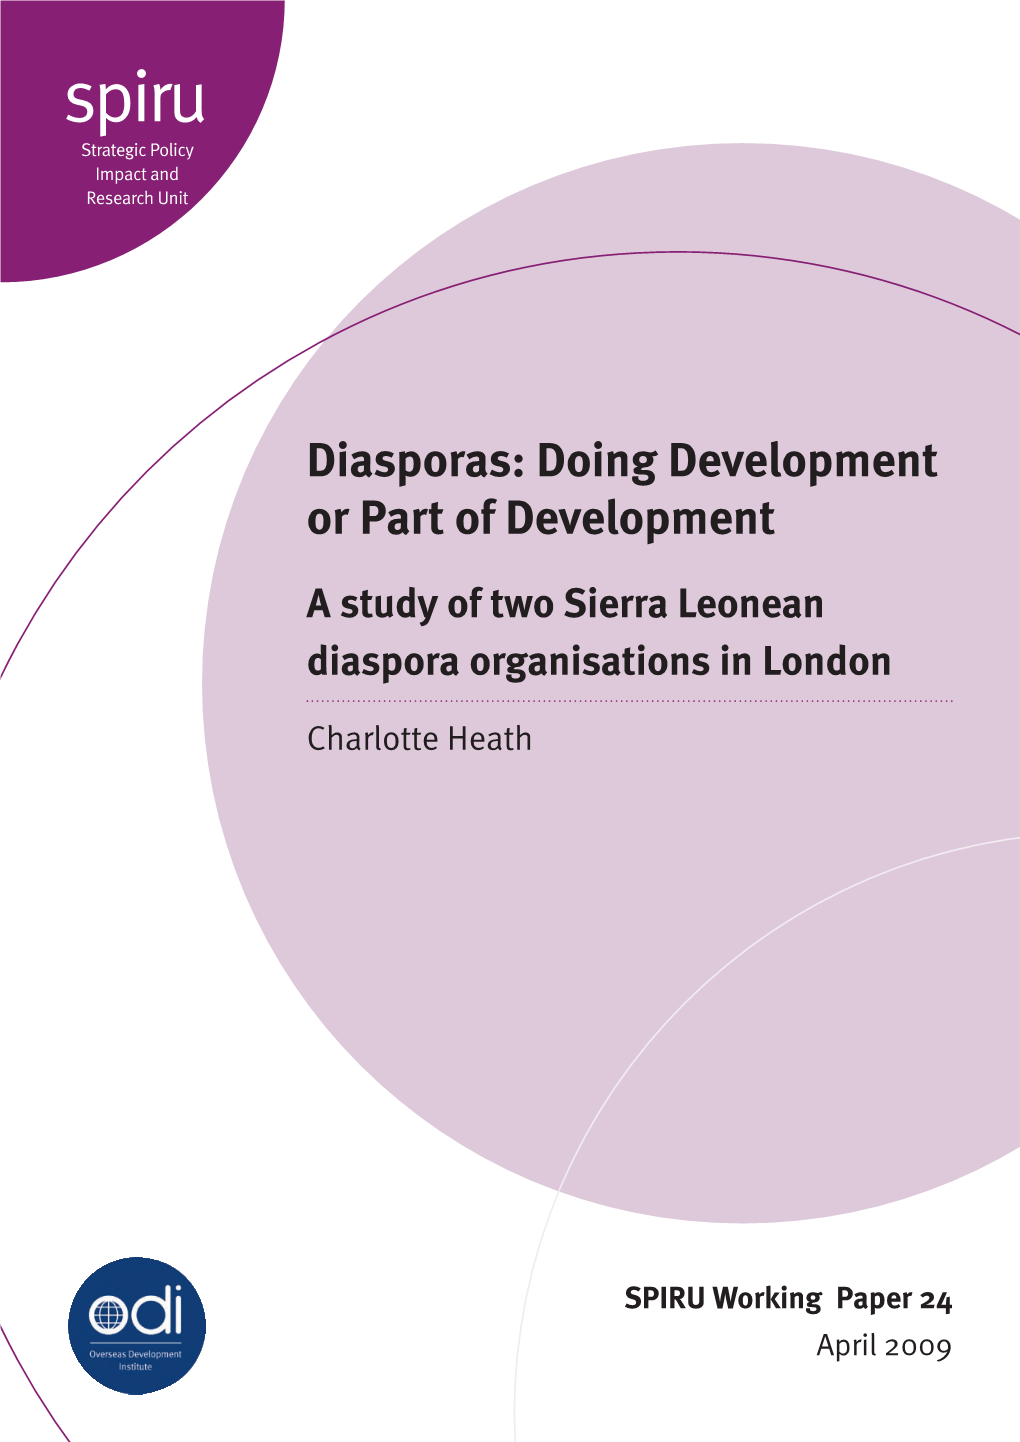 Diasporas: Doing Development Or Part of Development a Study of Two Sierra Leonean Diaspora Organisations in London